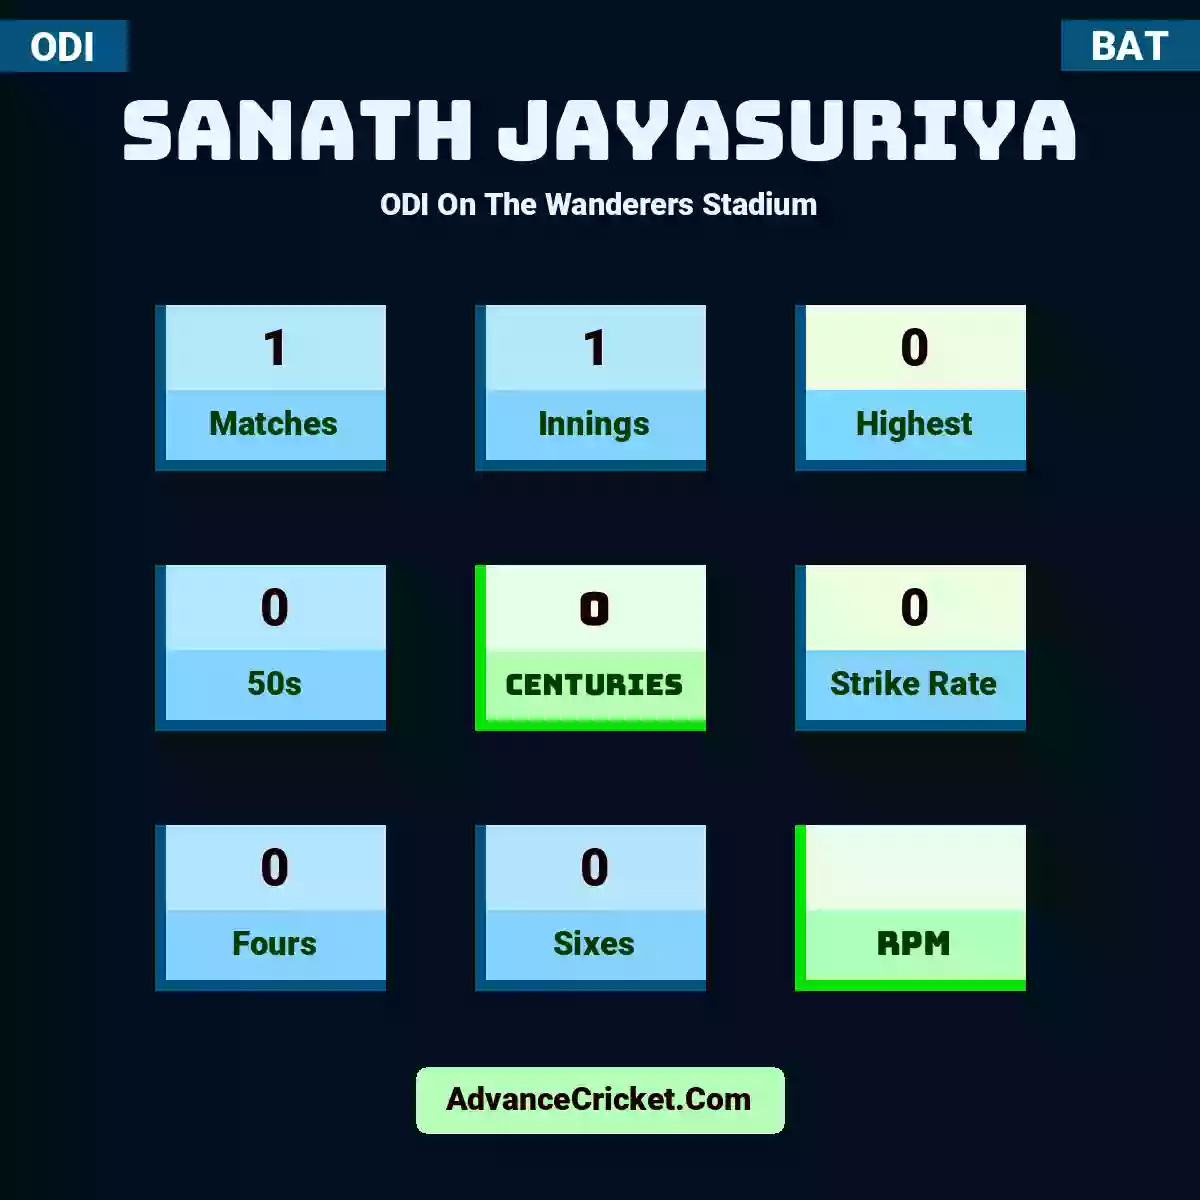 Sanath Jayasuriya ODI  On The Wanderers Stadium, Sanath Jayasuriya played 1 matches, scored 0 runs as highest, 0 half-centuries, and 0 centuries, with a strike rate of 0. S.Jayasuriya hit 0 fours and 0 sixes.